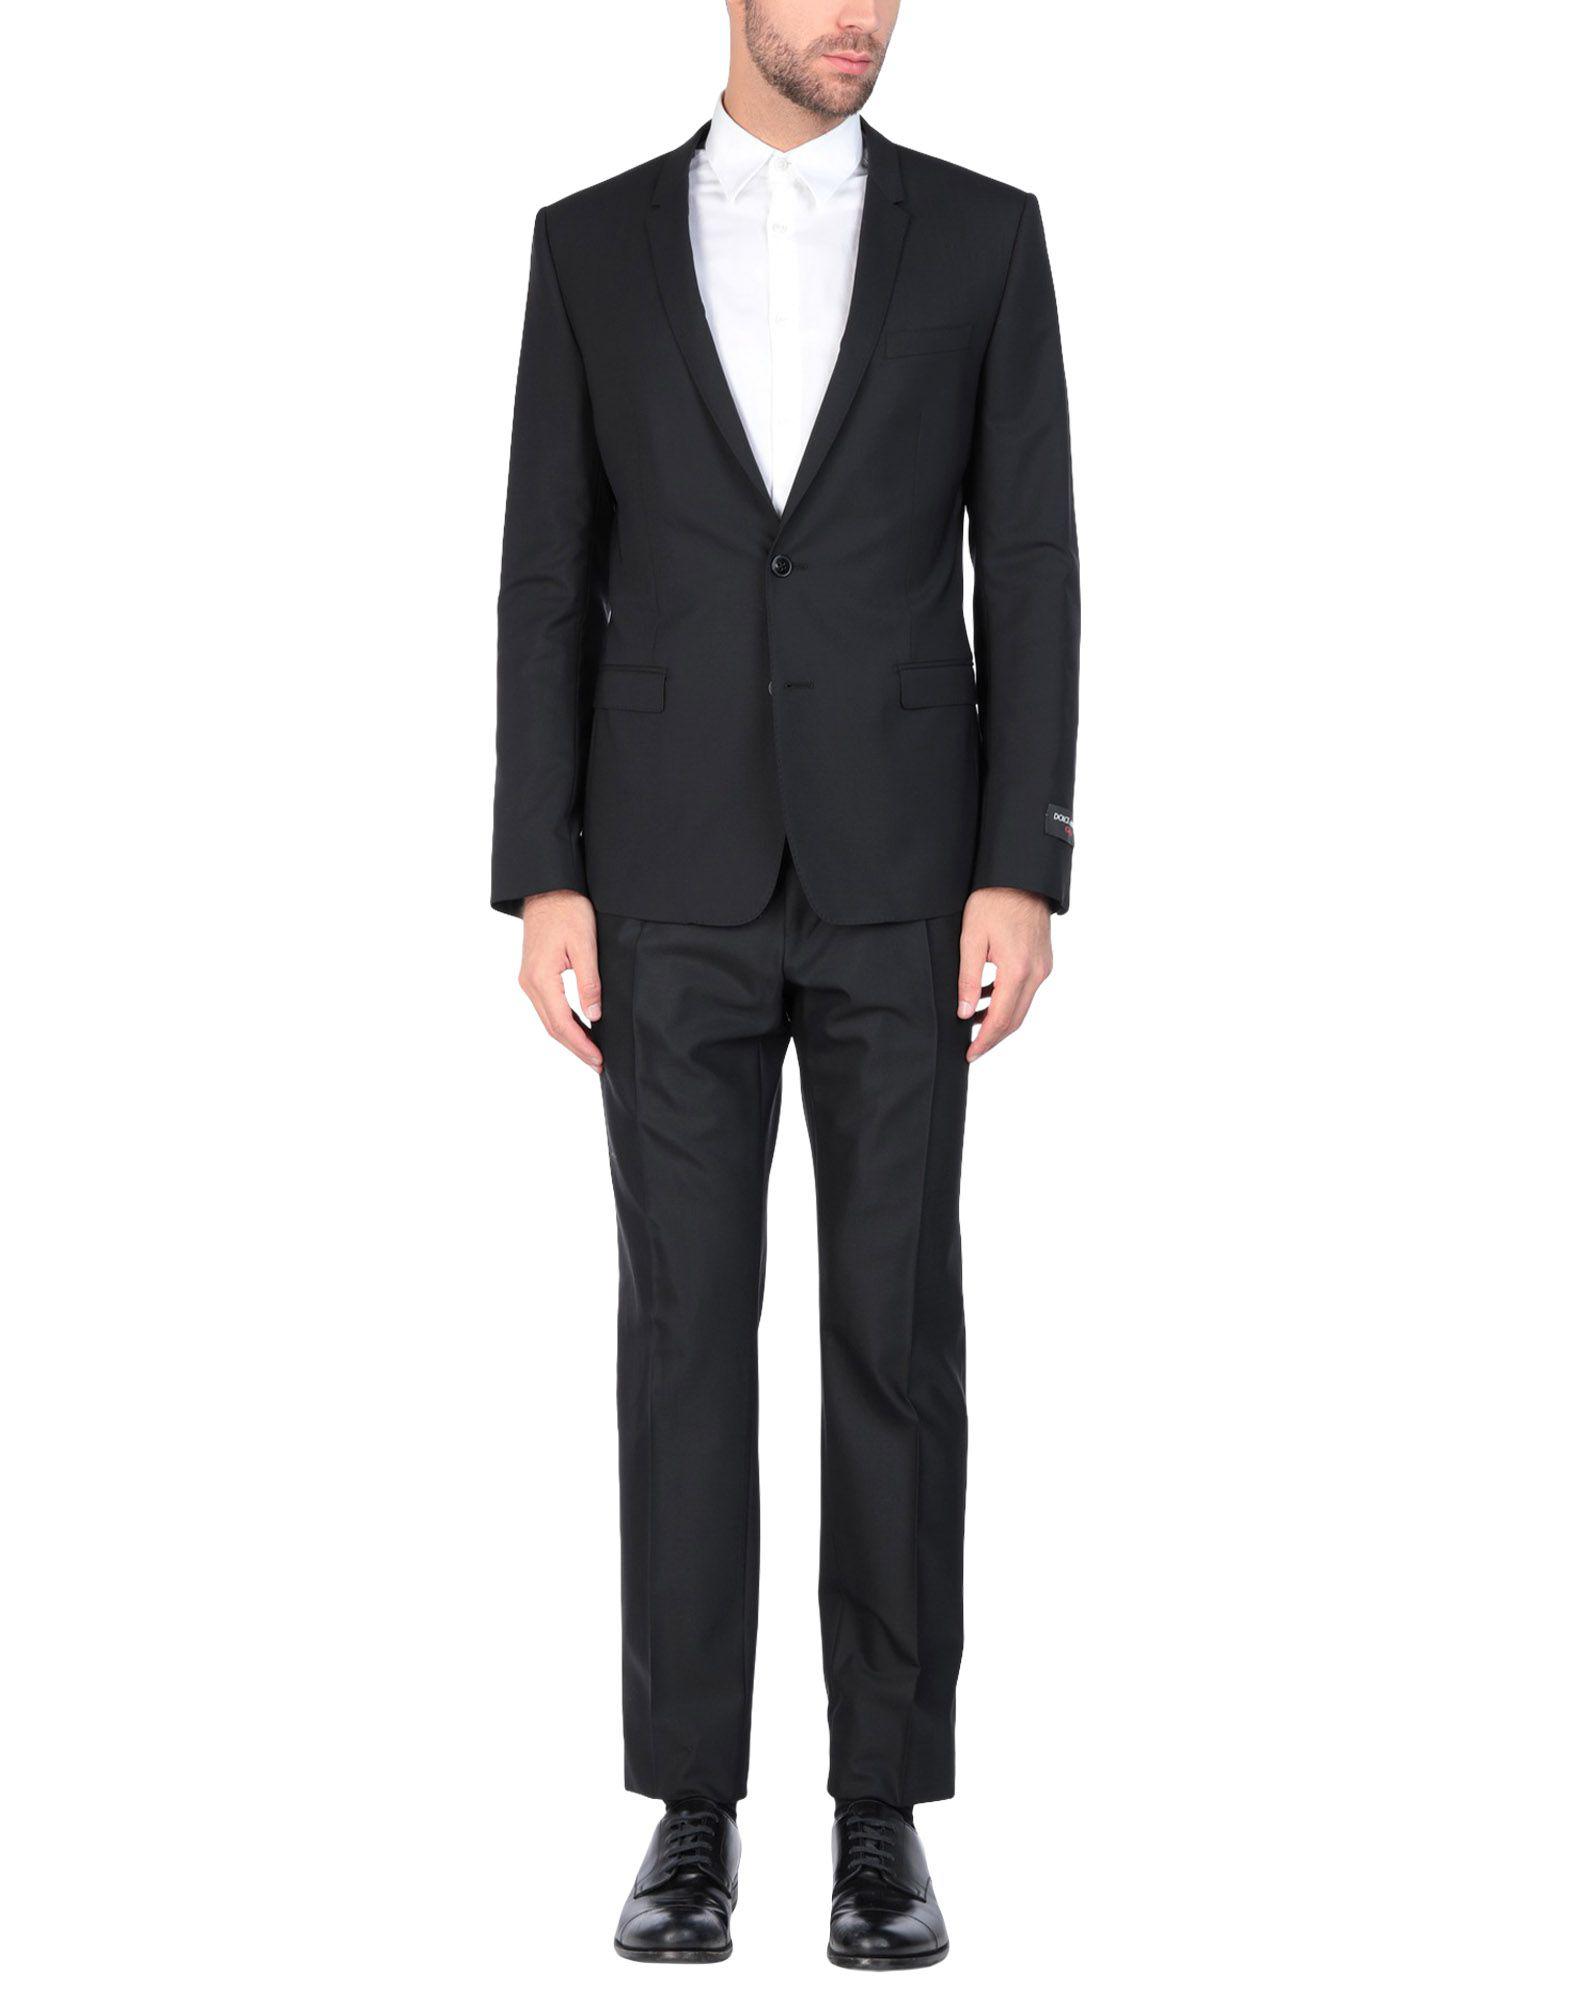 Dolce & Gabbana Suit in Black for Men - Lyst